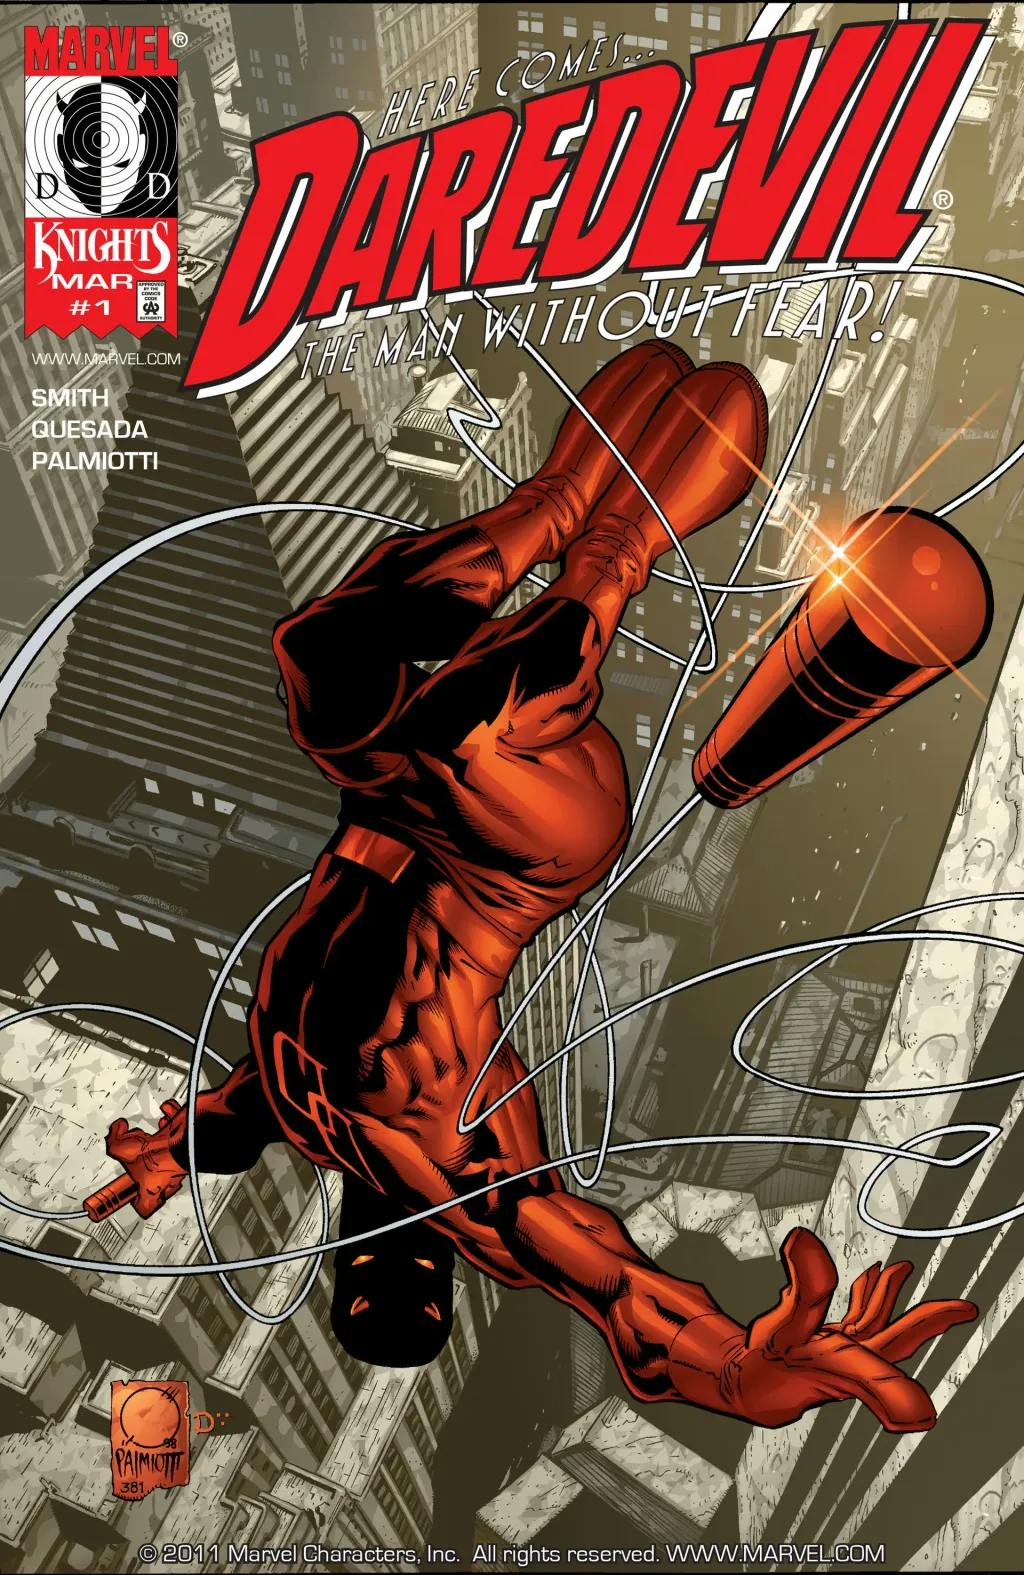 Daredevil #1 by Kevin Smith, Jimmy Palmiotti, and Joe Quesada